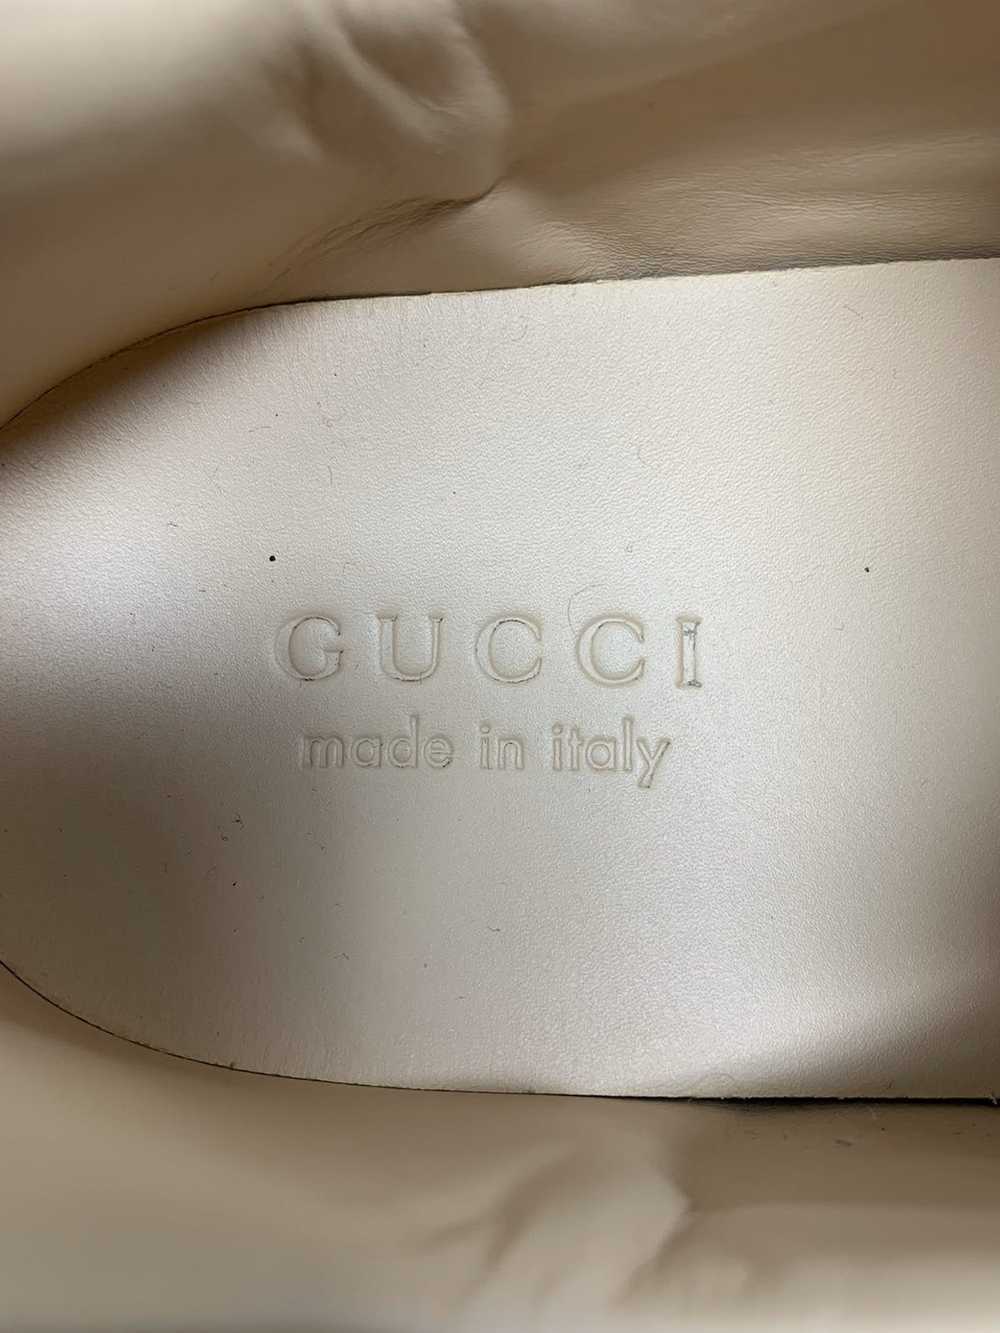 Gucci Ace Low Flames - image 7